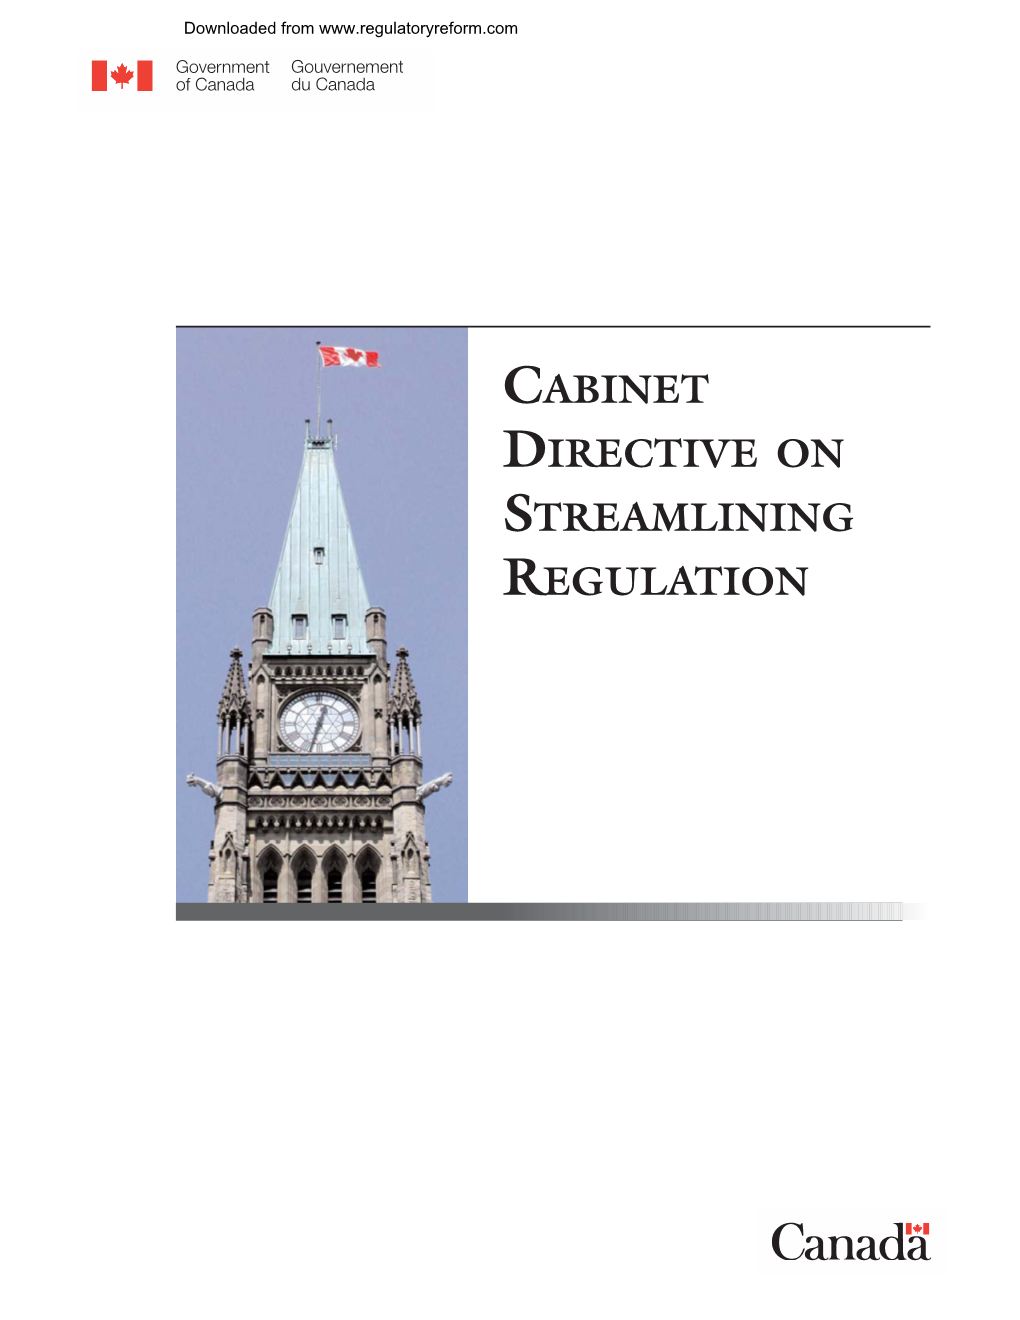 Canada Cabinet Directive on Streamlining Regulation